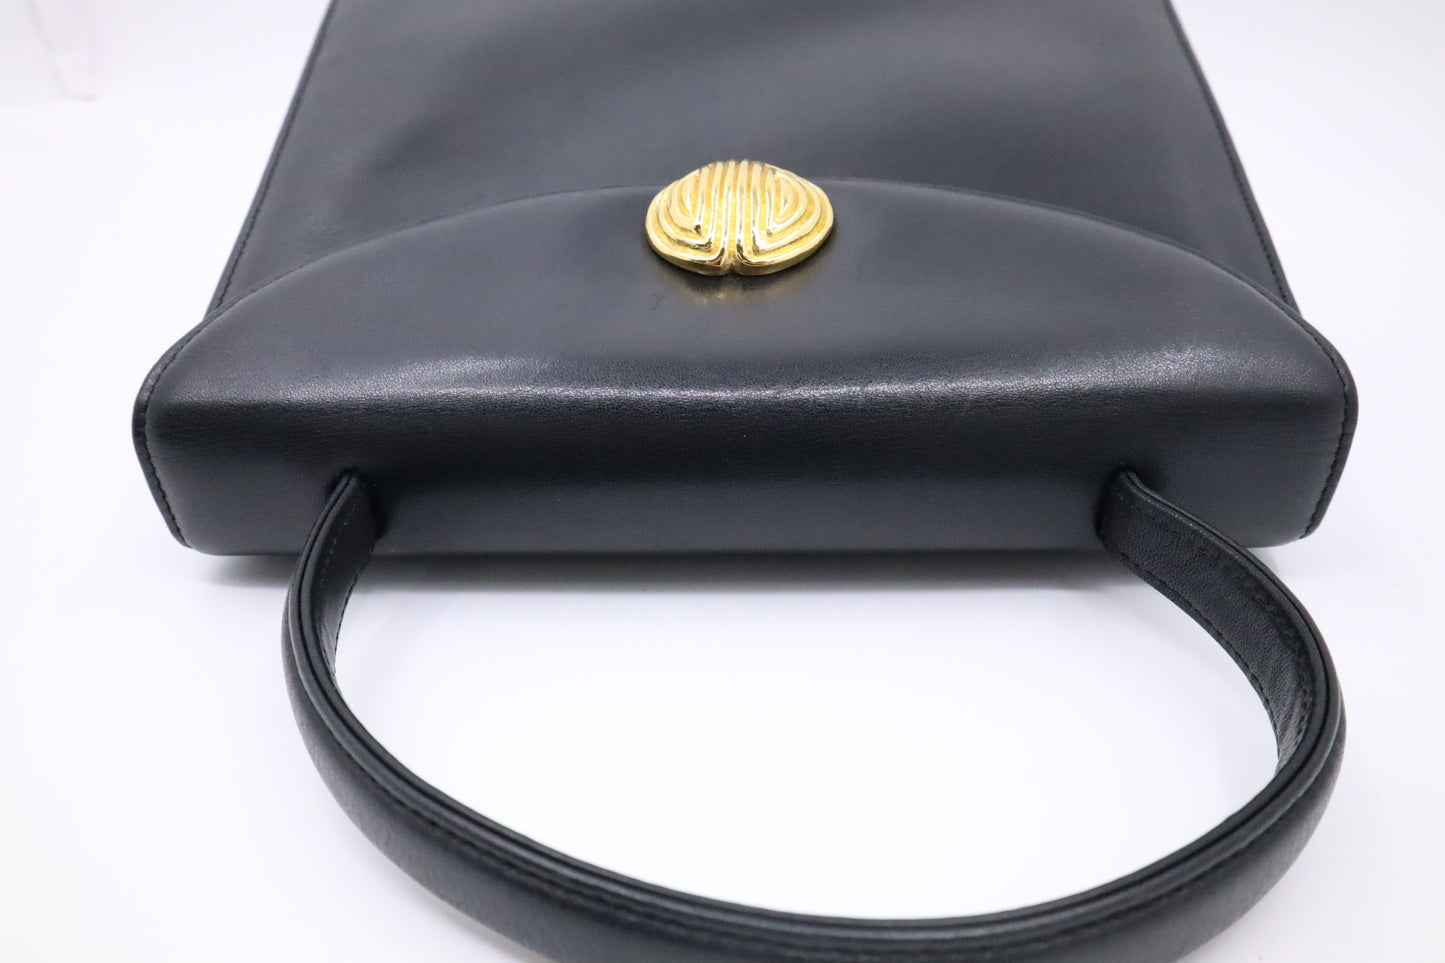 Givenchy Handbag in Black Leather